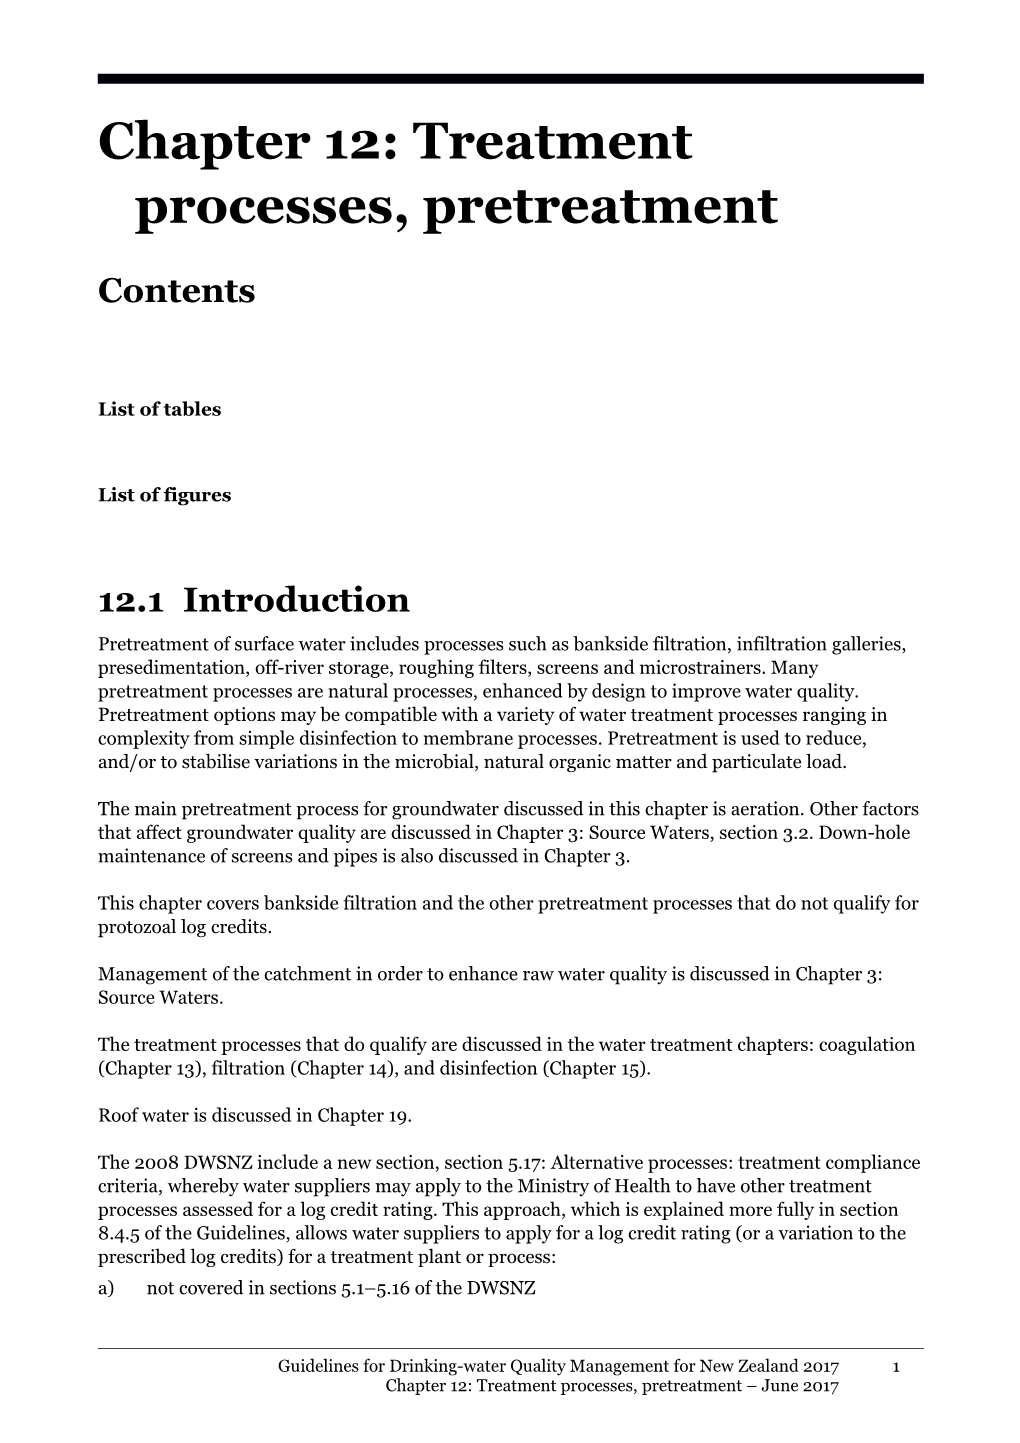 Chapter 12. Treatment Processes, Pretreatment